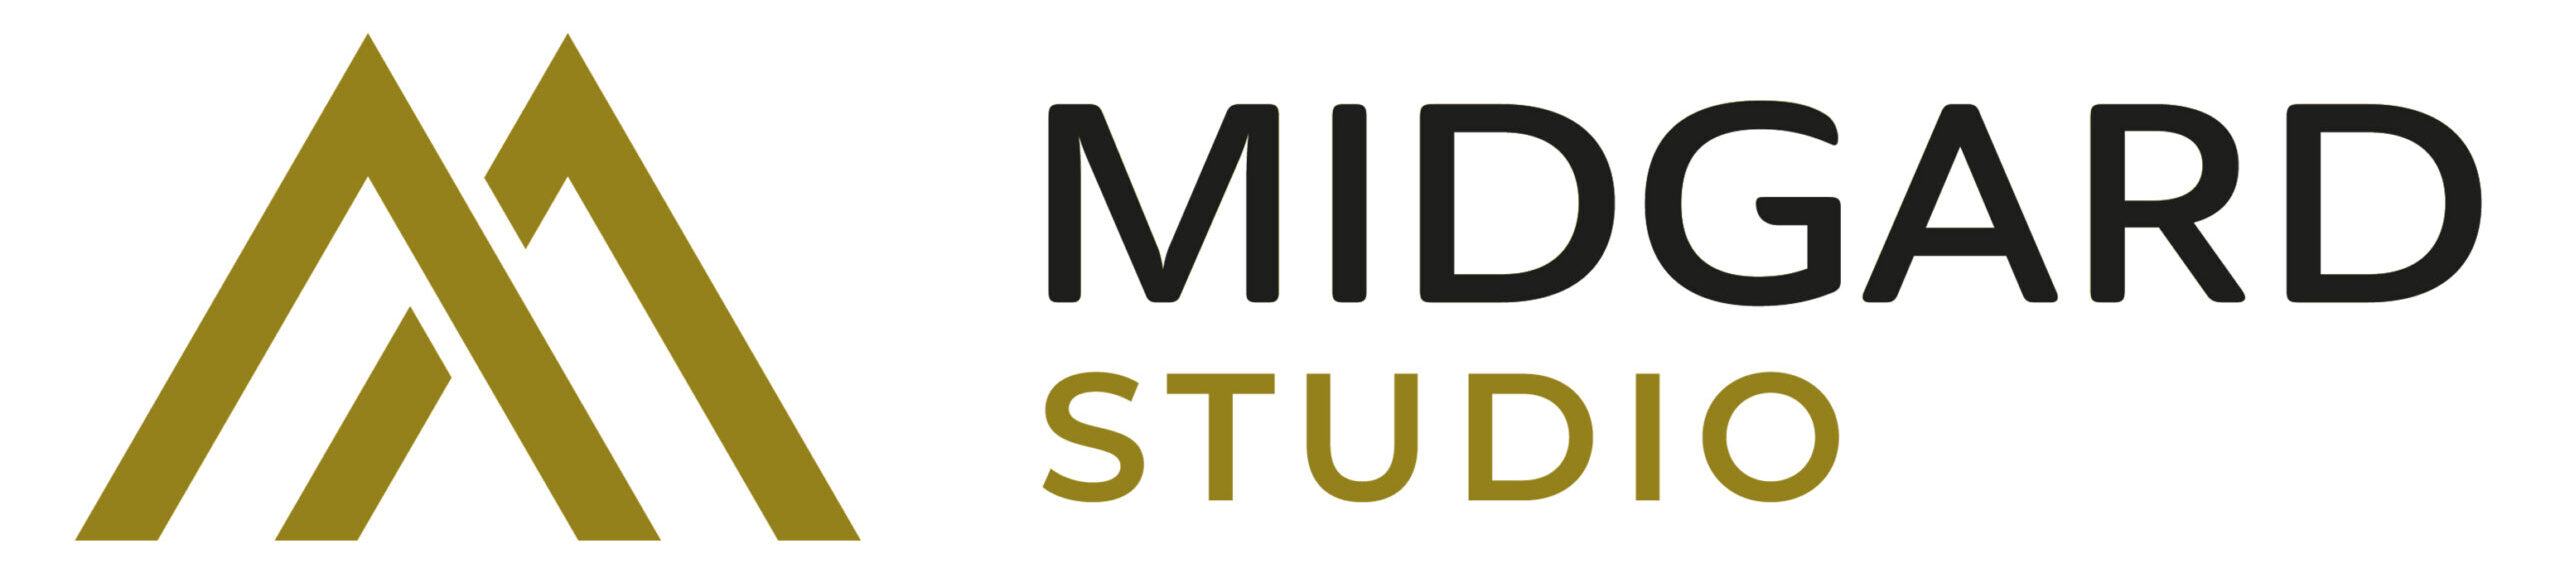 Midgard Studio logo